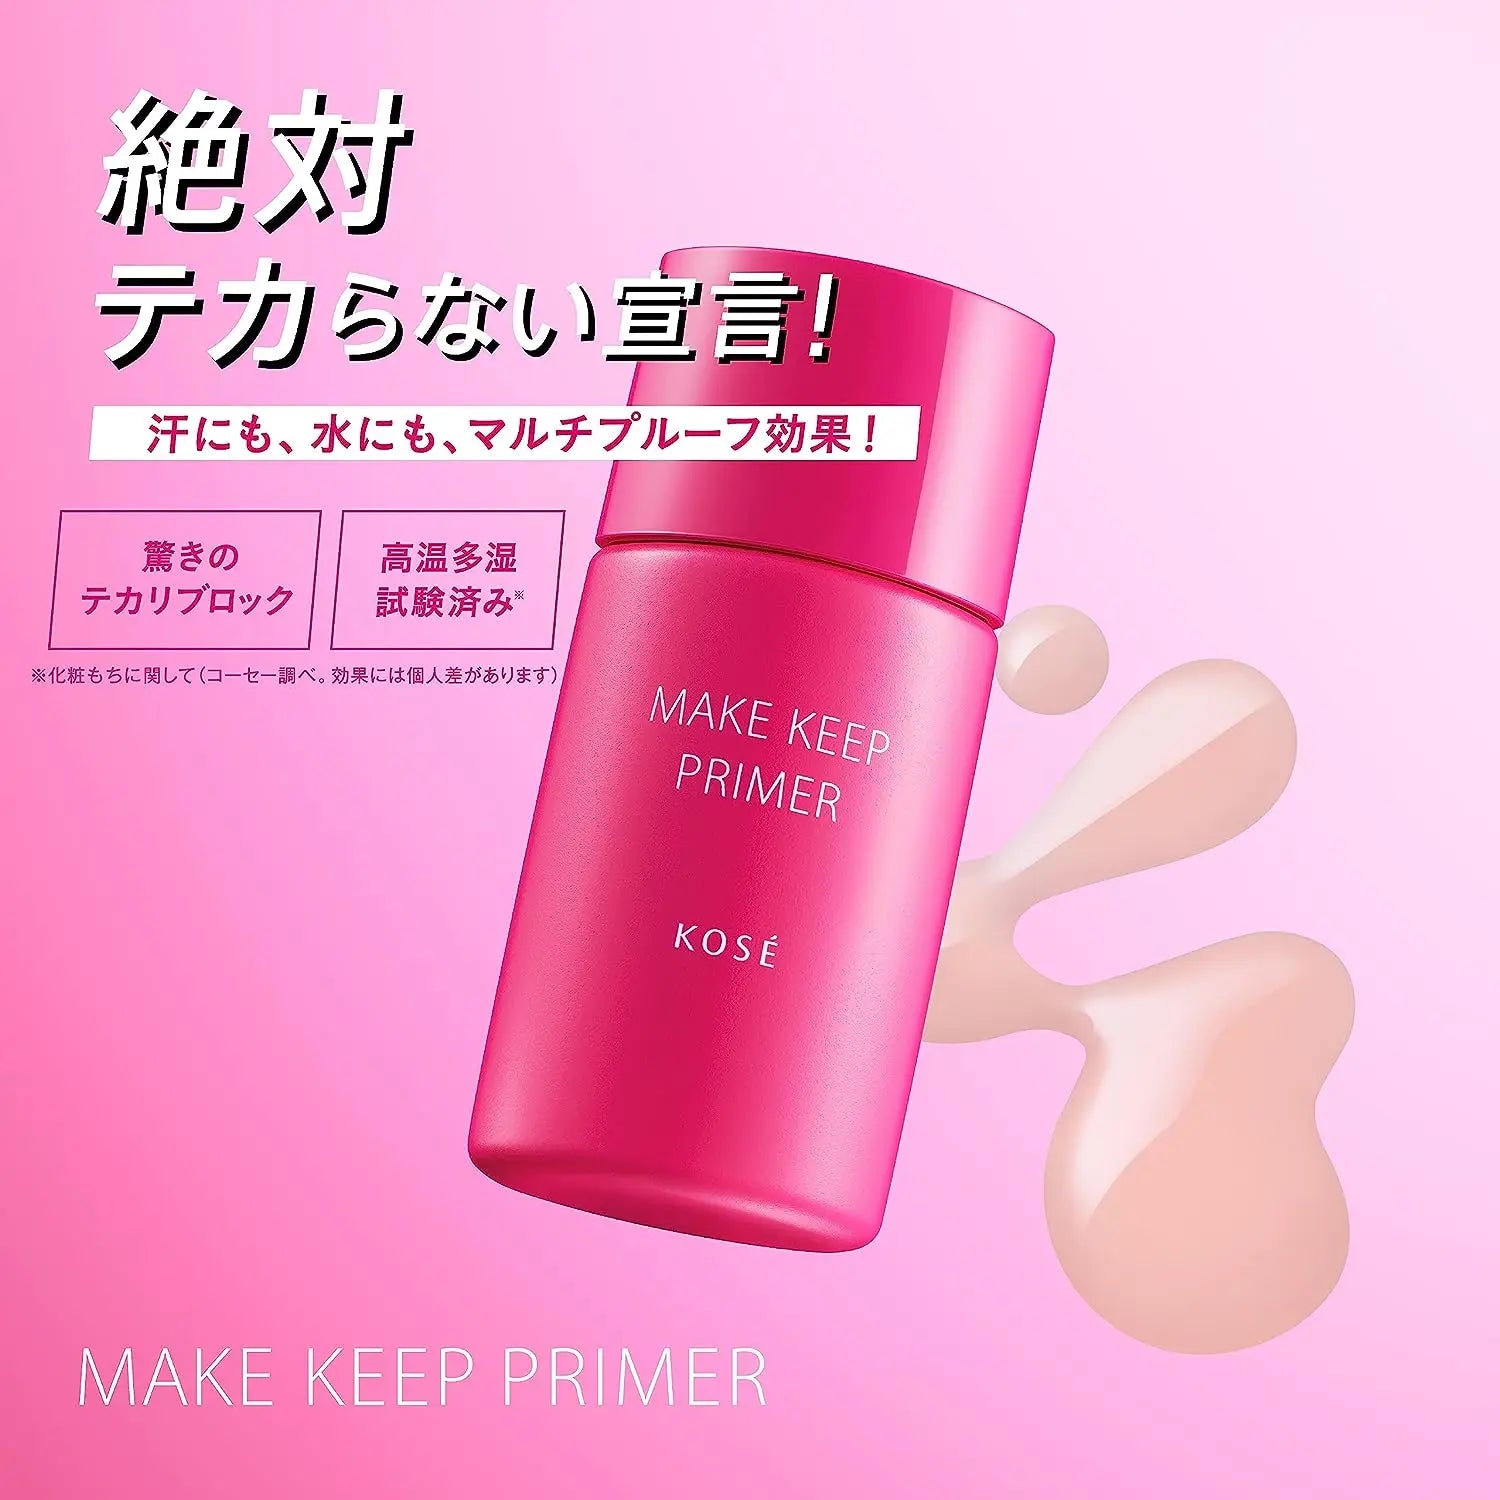 Kose Make Keep Primer 25g - Buy Me Japan